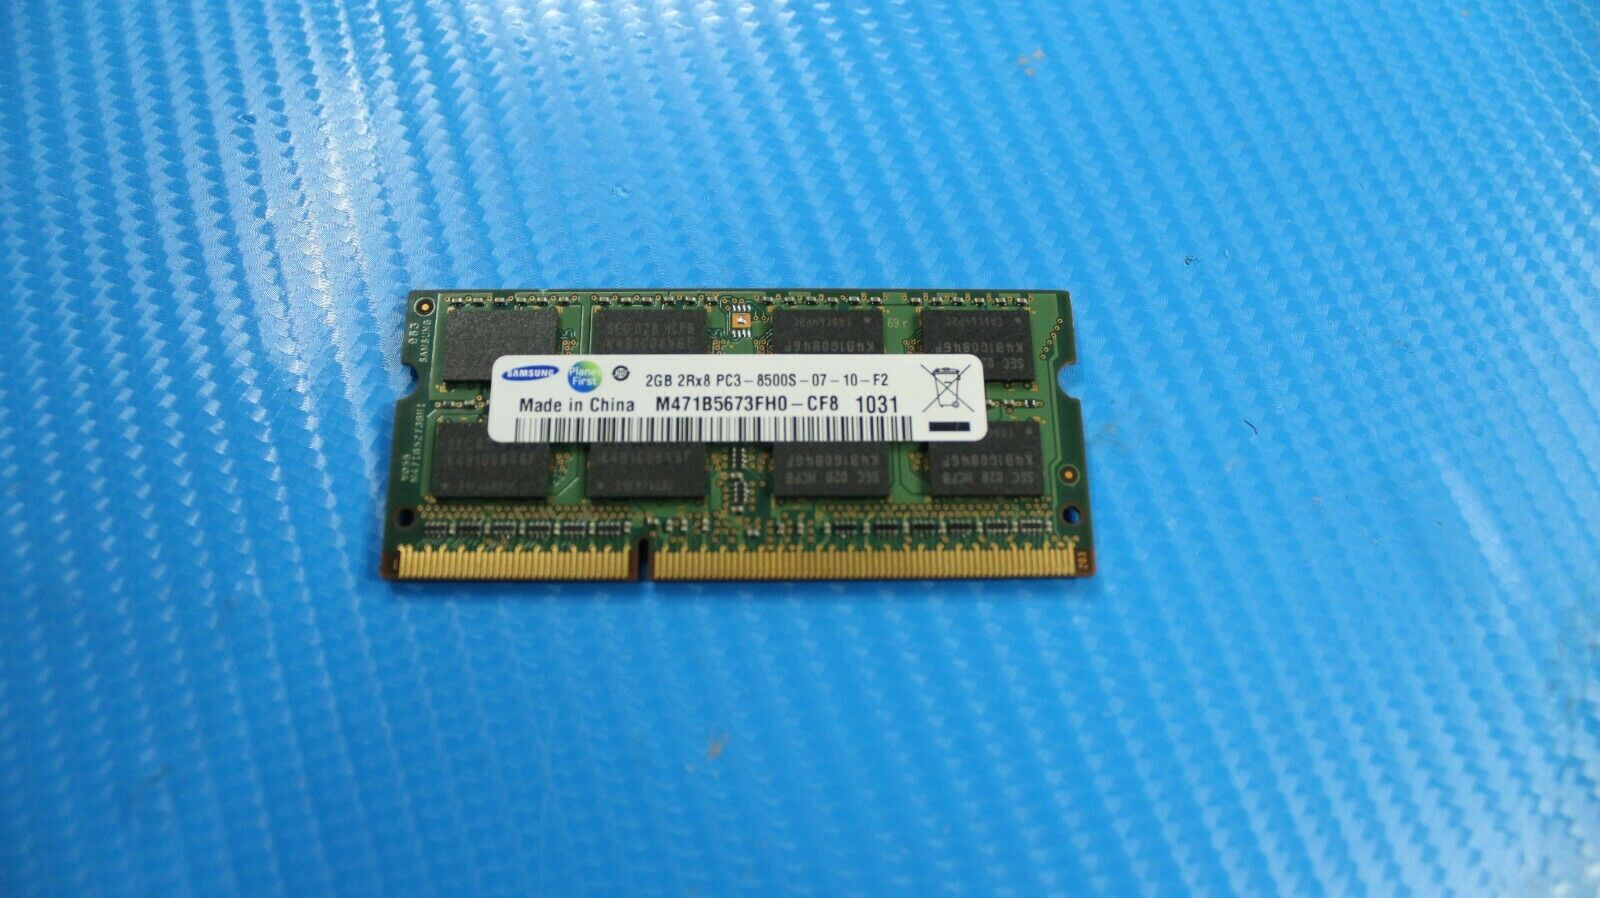 MacBook Pro A1286 Samsung 2GB 2Rx8 PC3-8500S SO-DIMM RAM Memory M471B5673FH0-CF8 Samsung